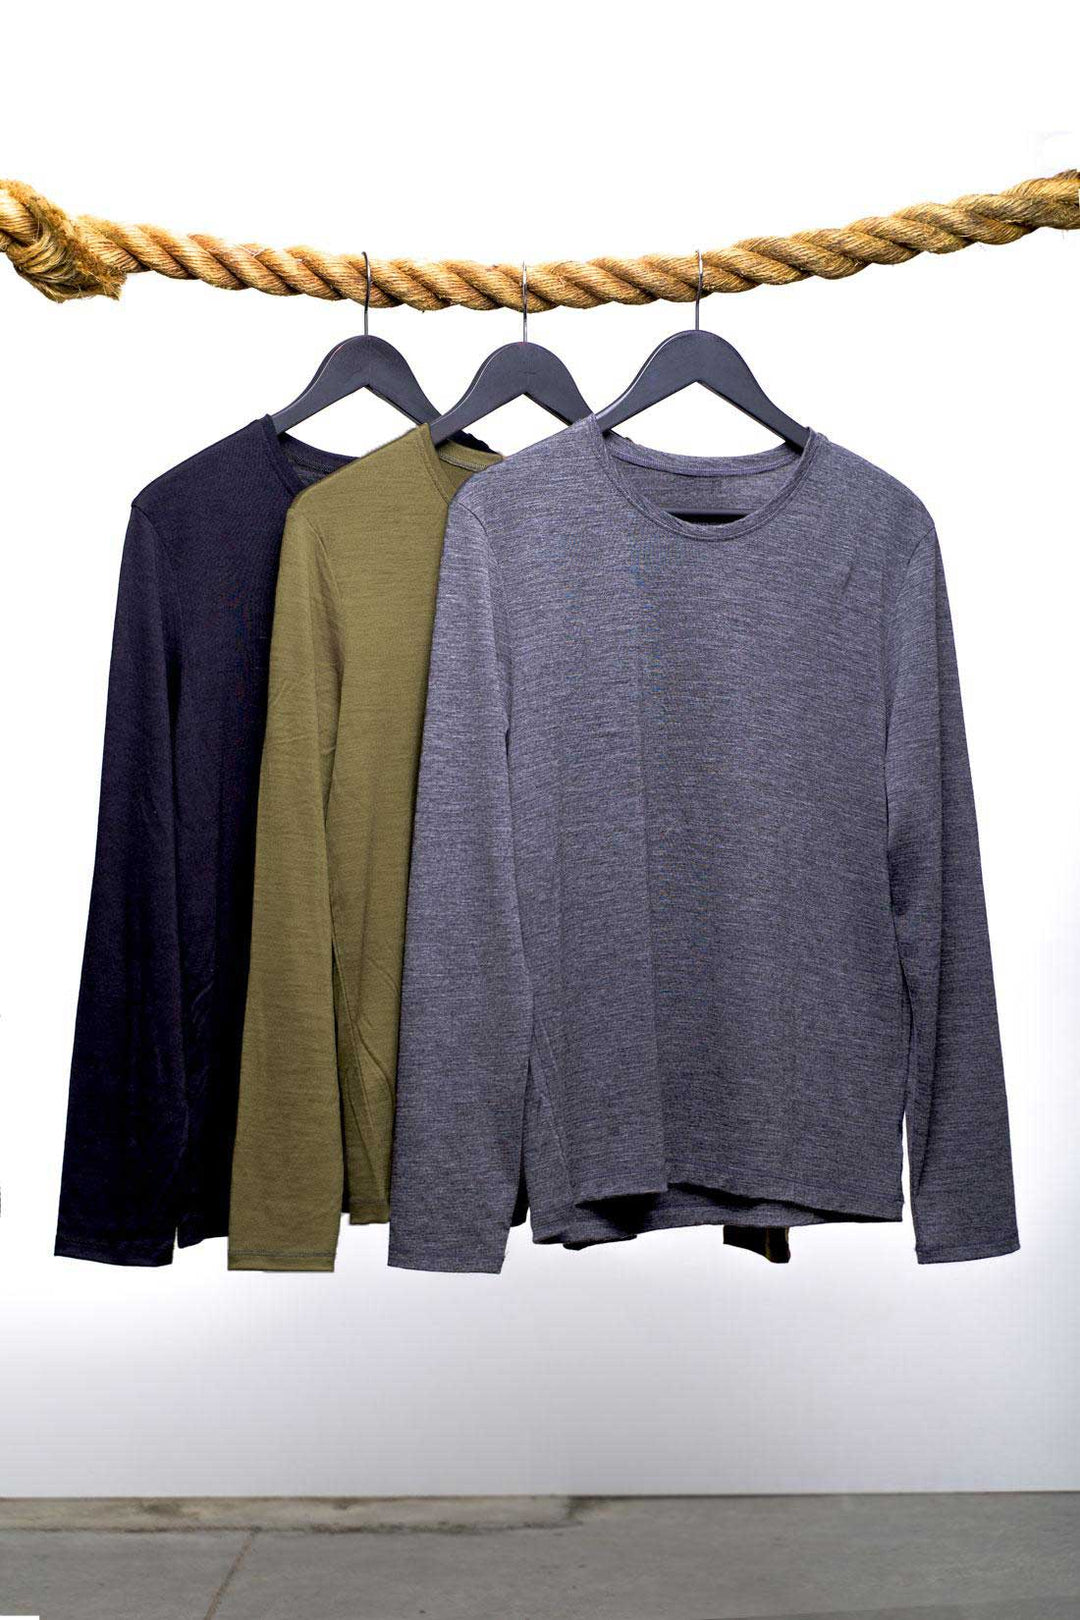 long sleeve 100% superfine merino wool shirts